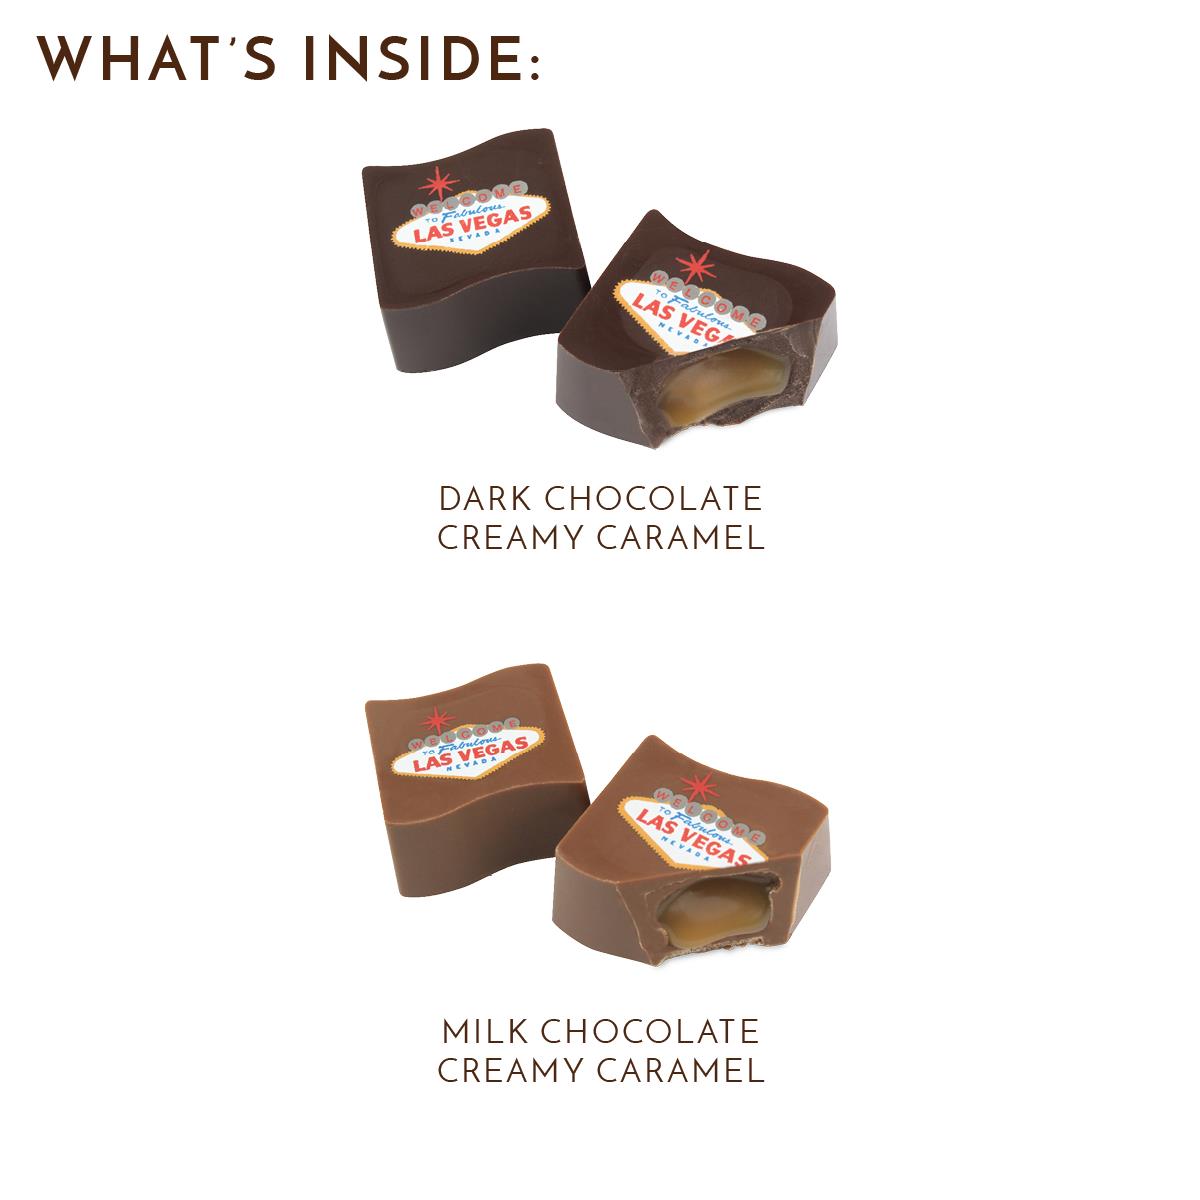 What's Inside: Ethel M Chocolates Taste of Las Vegas Creamy Caramels 5-Piece